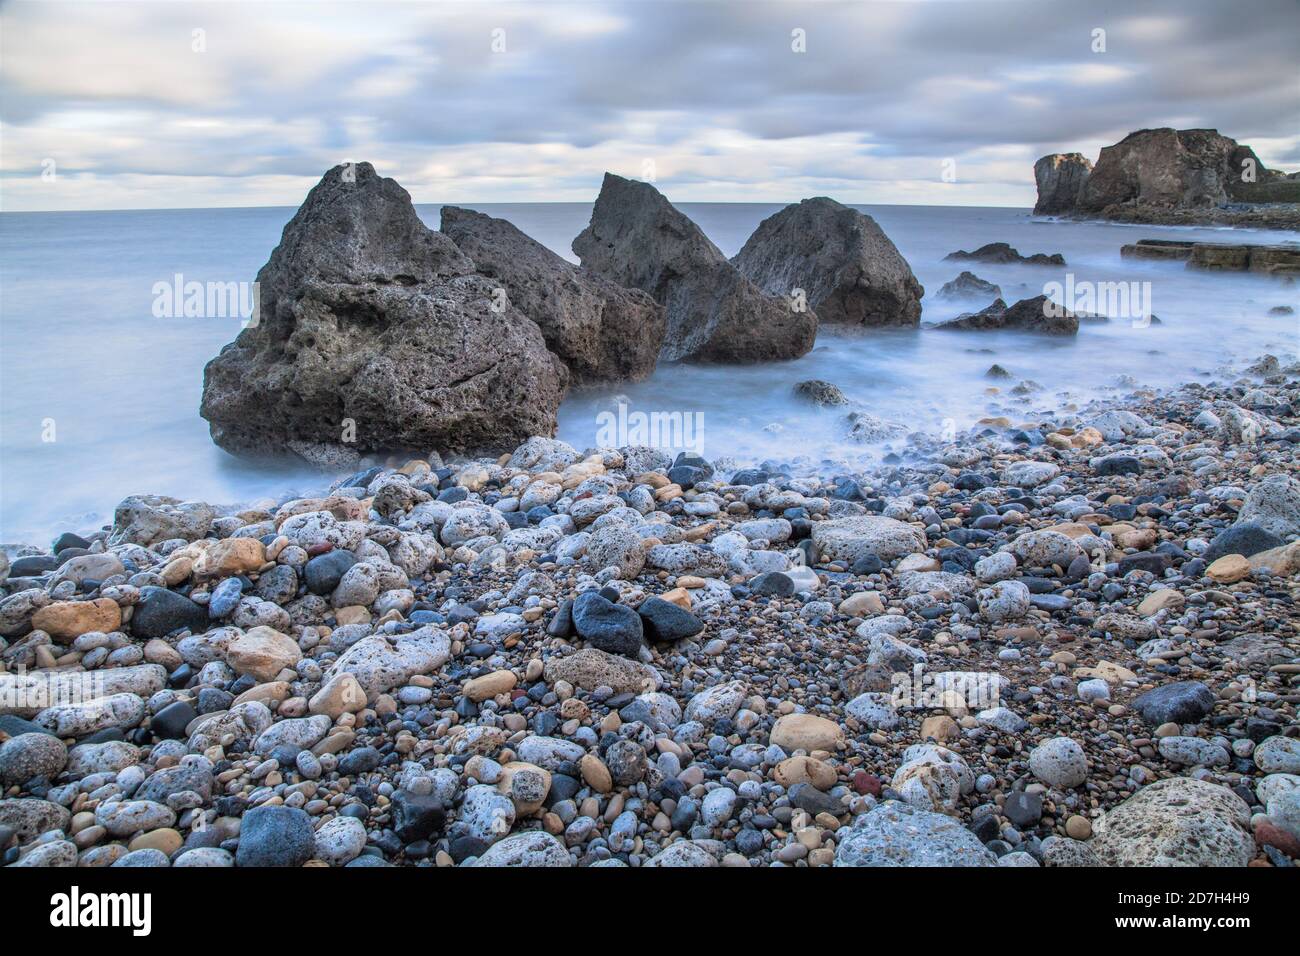 Waves swirling around large rocks near a pebble beach Stock Photo